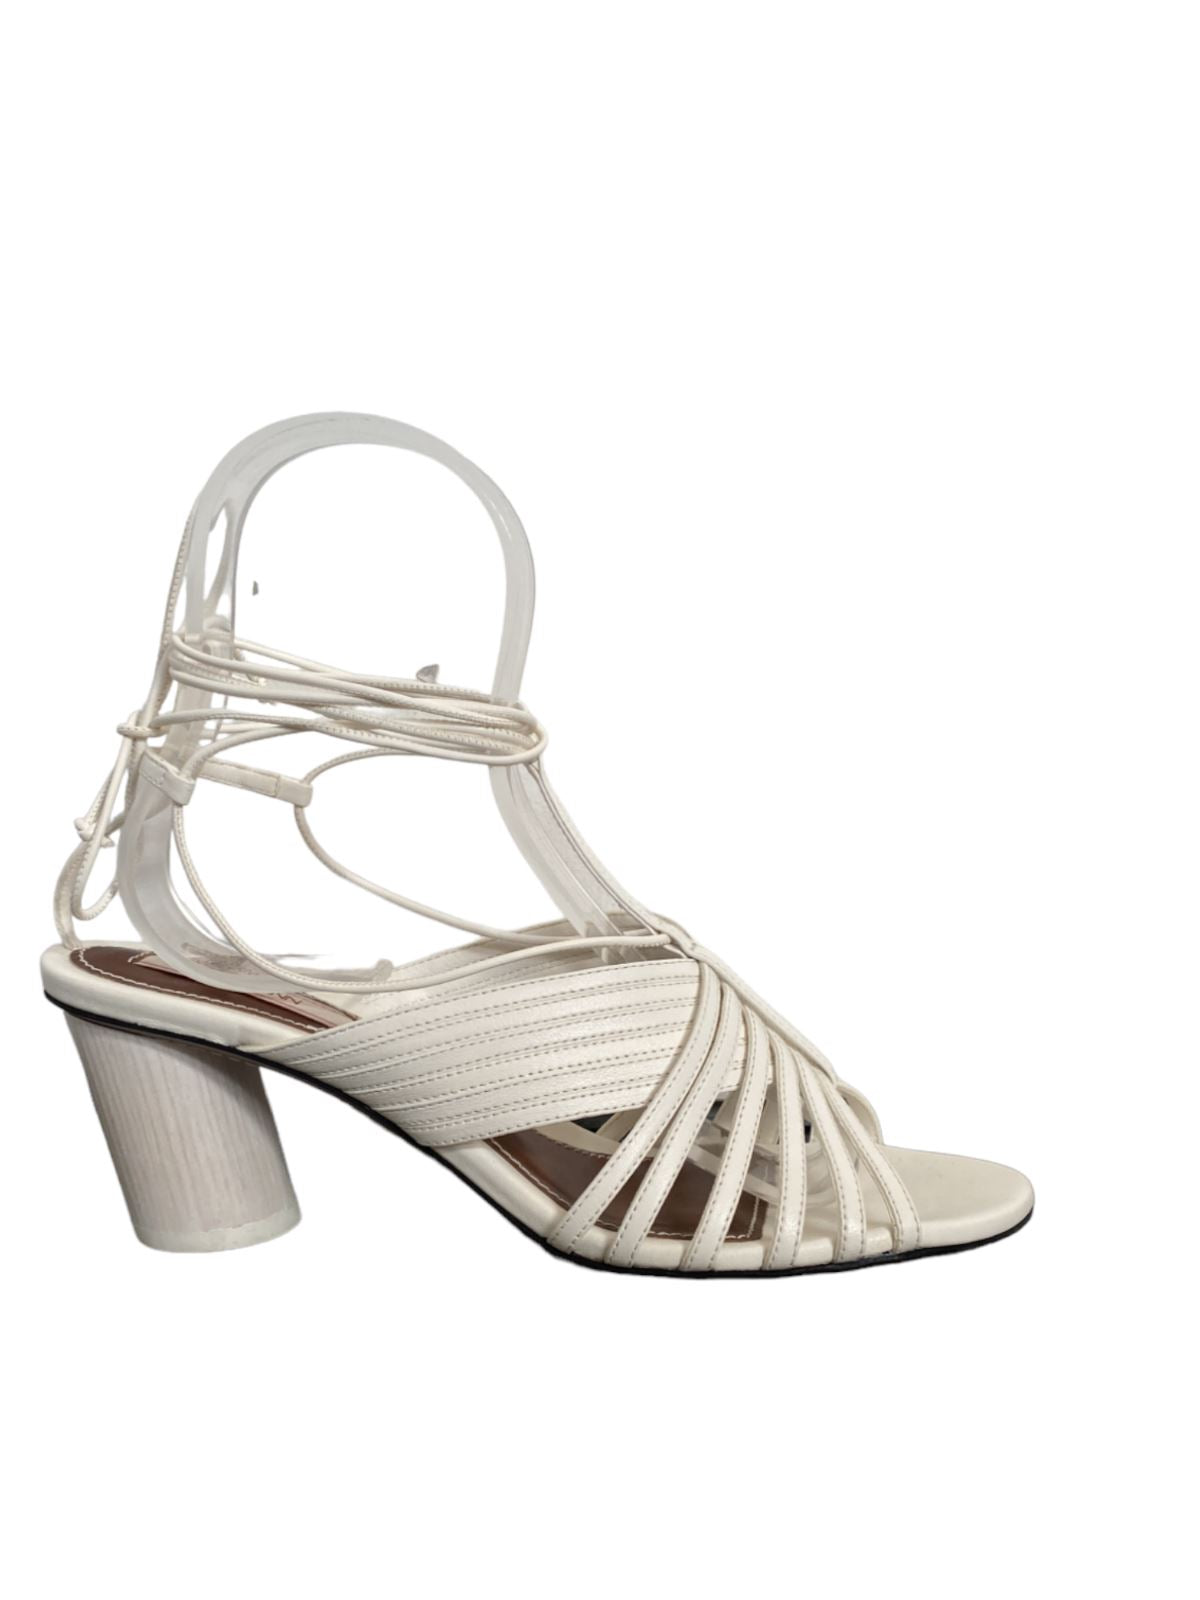 Zimmermann Crossover Strappy Mule | Block Heel, Sandal, White/Ivory, Ankle Strap